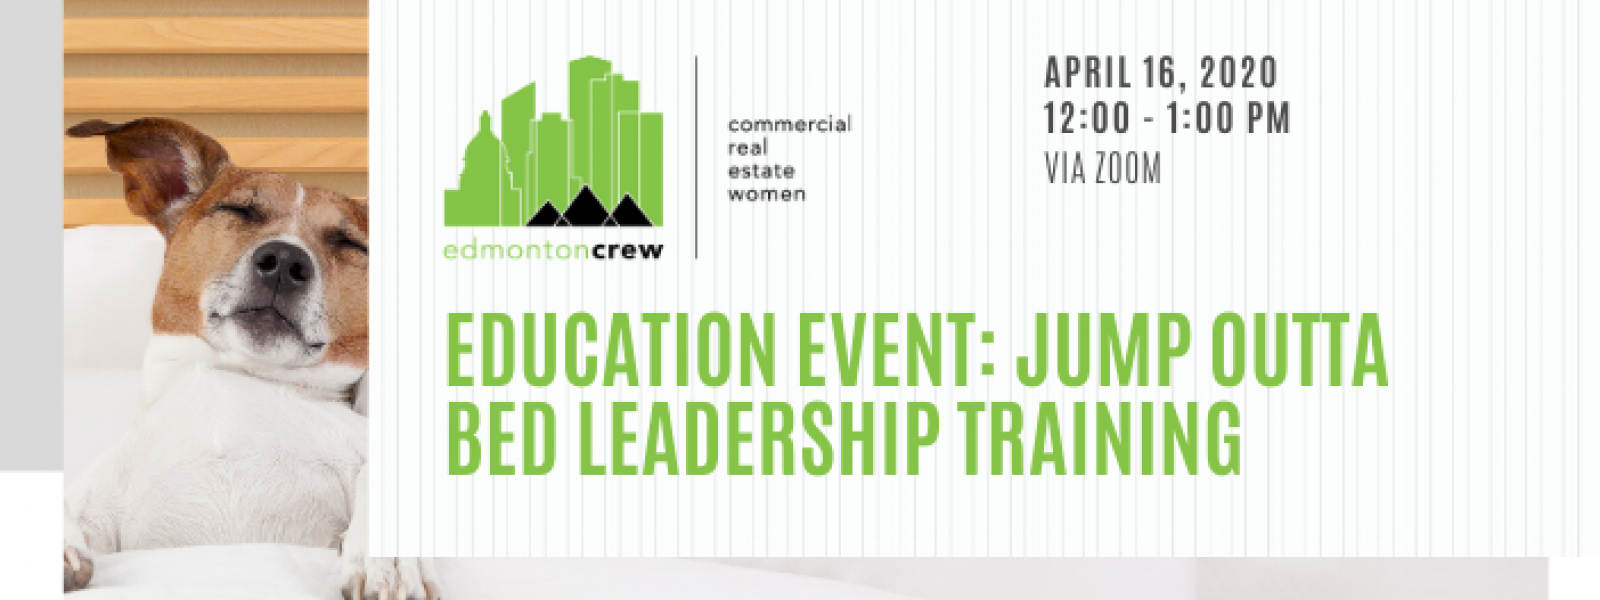 Edmonton CREW Education Event 2020 04 16 W LI T